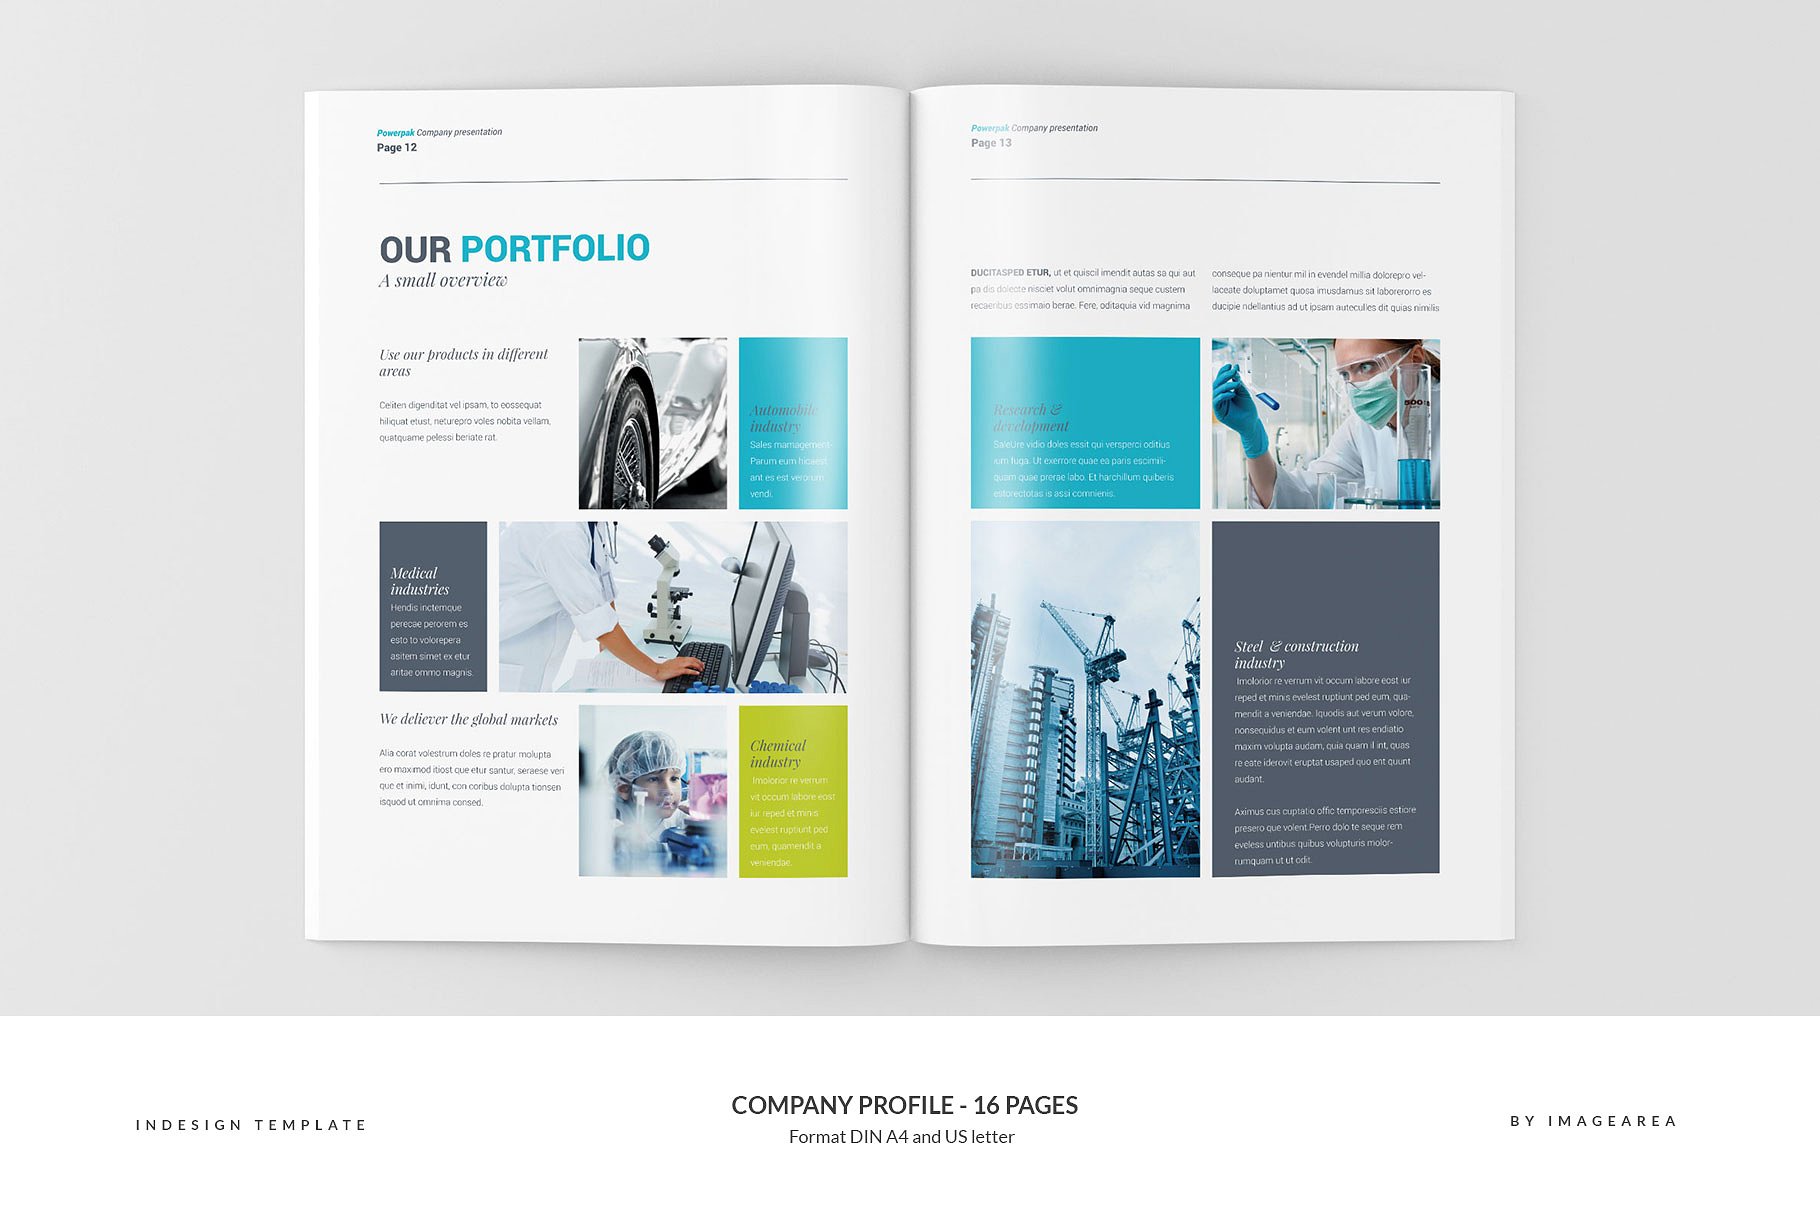 企业宣传画册设计模板 Company Profile – 16 Pages插图(7)